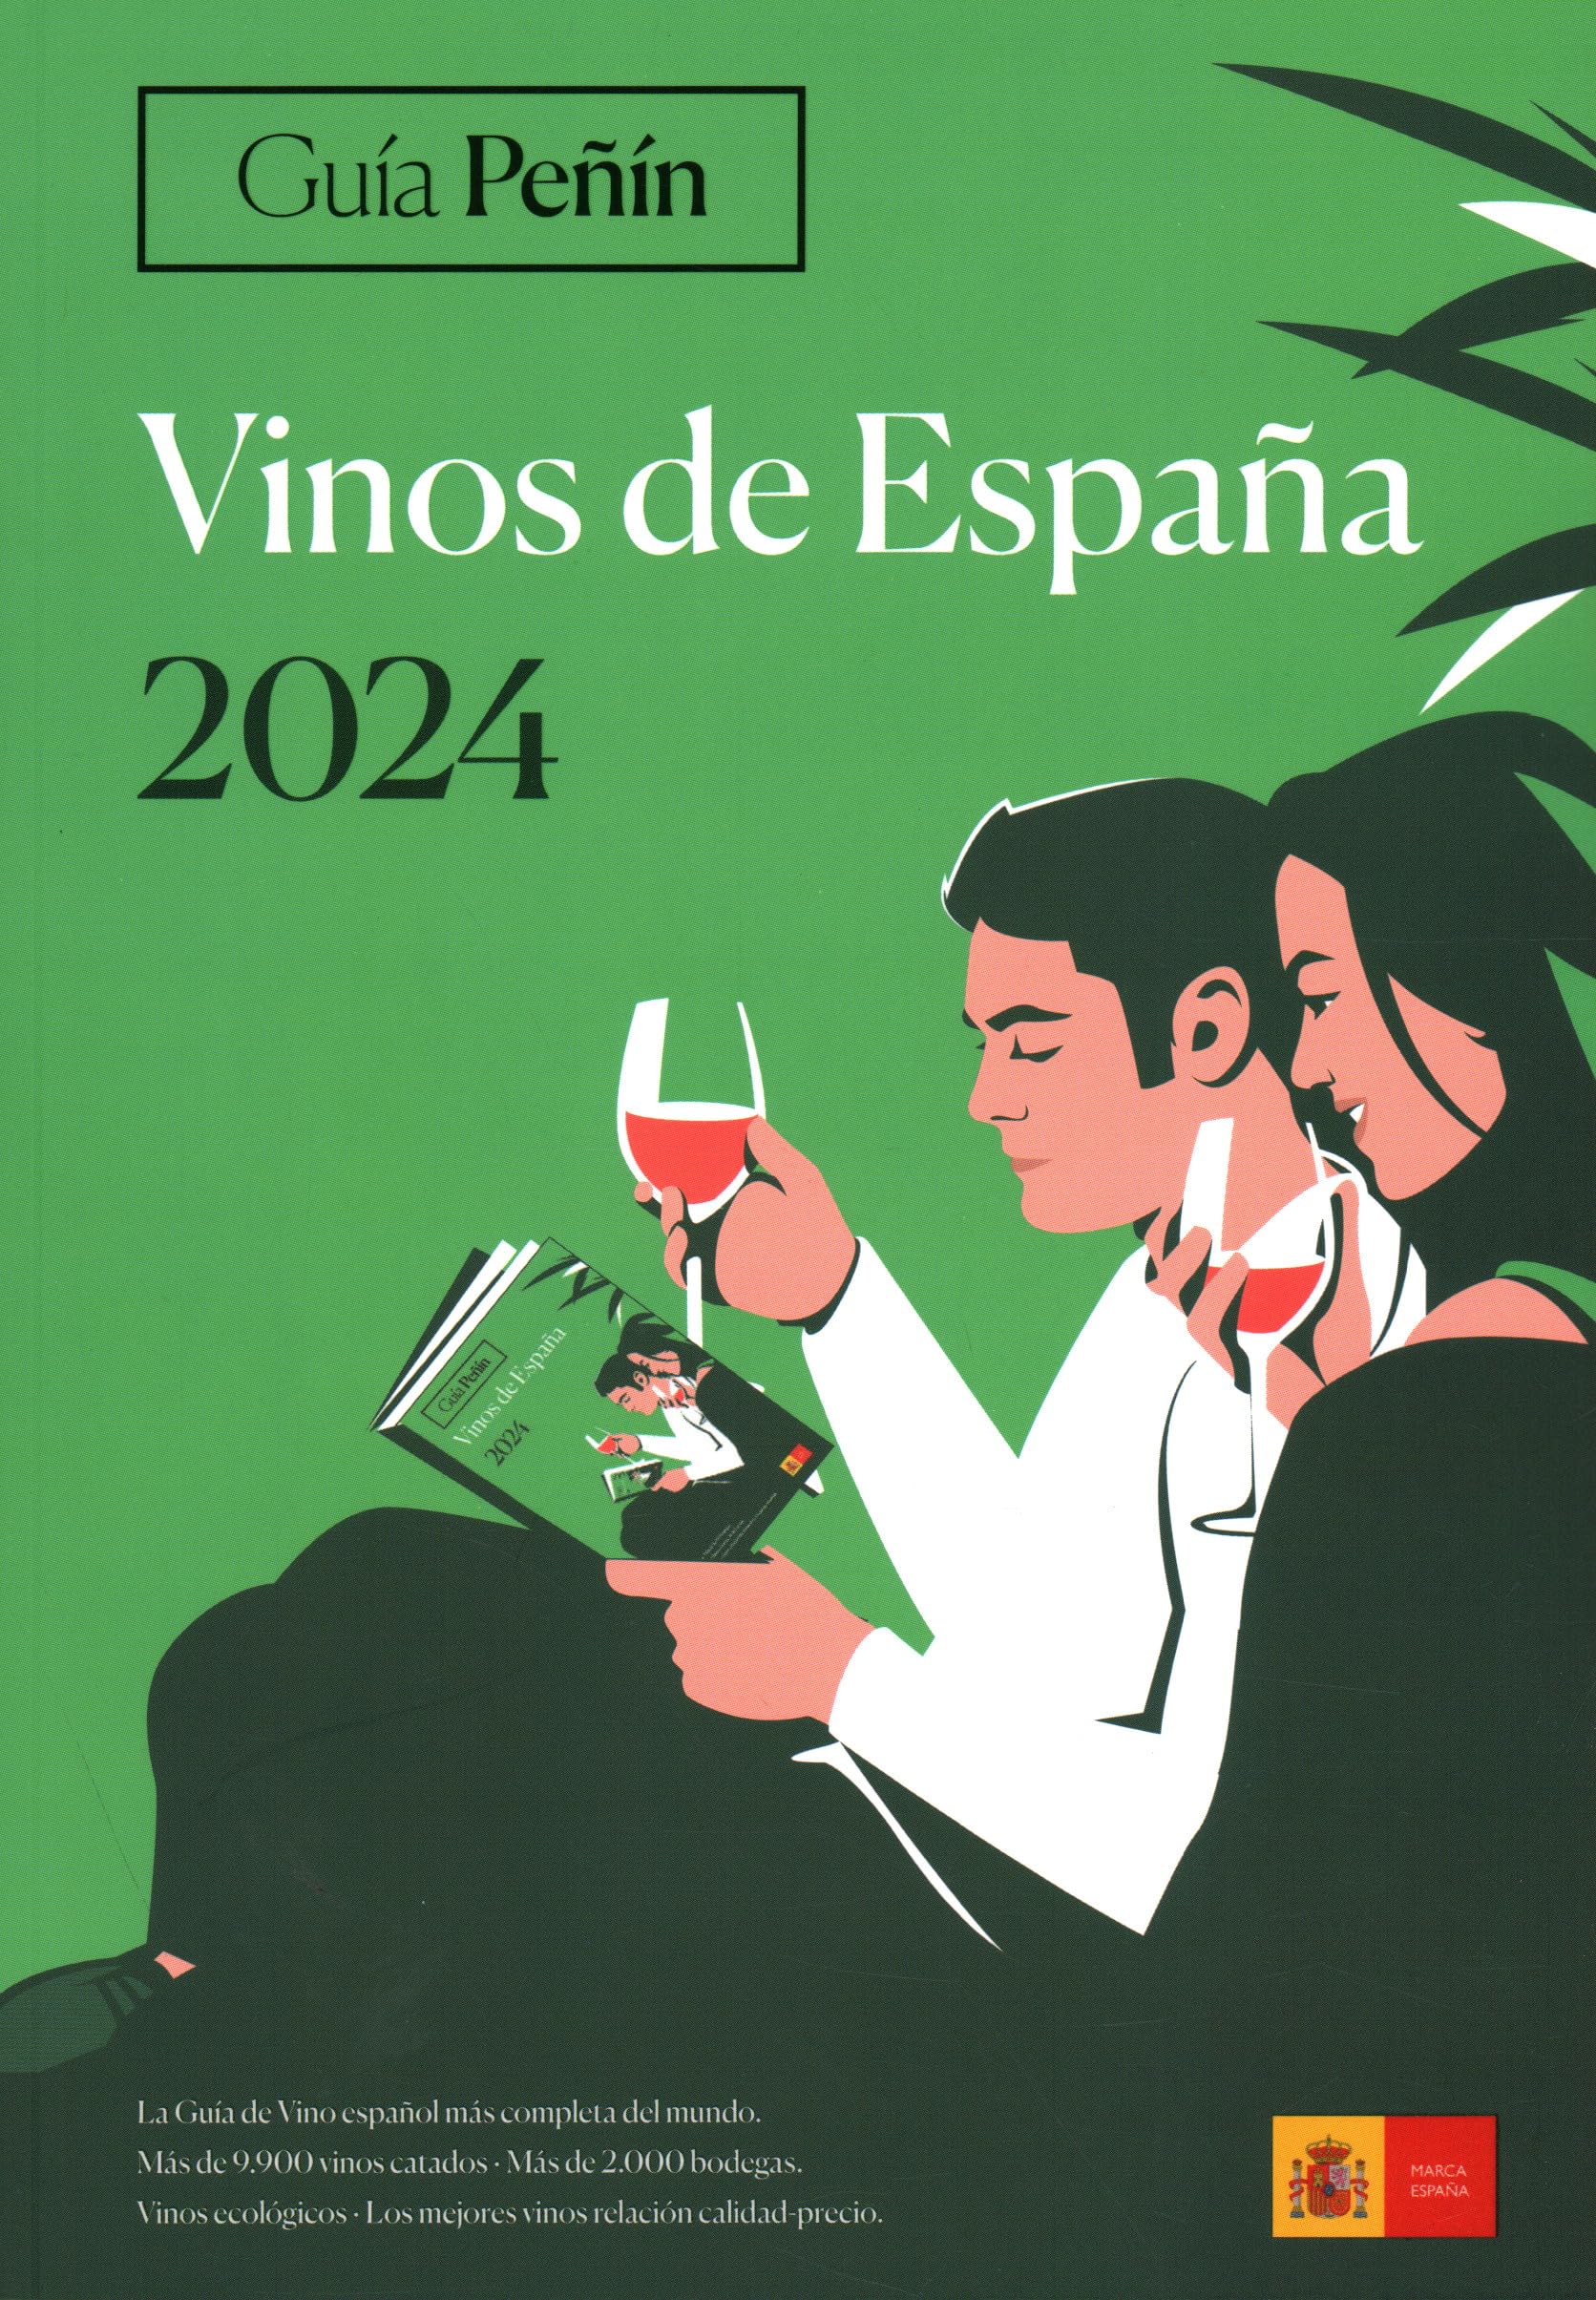 Guía Peñín Vinos de España 2024 (Spanish Edition)